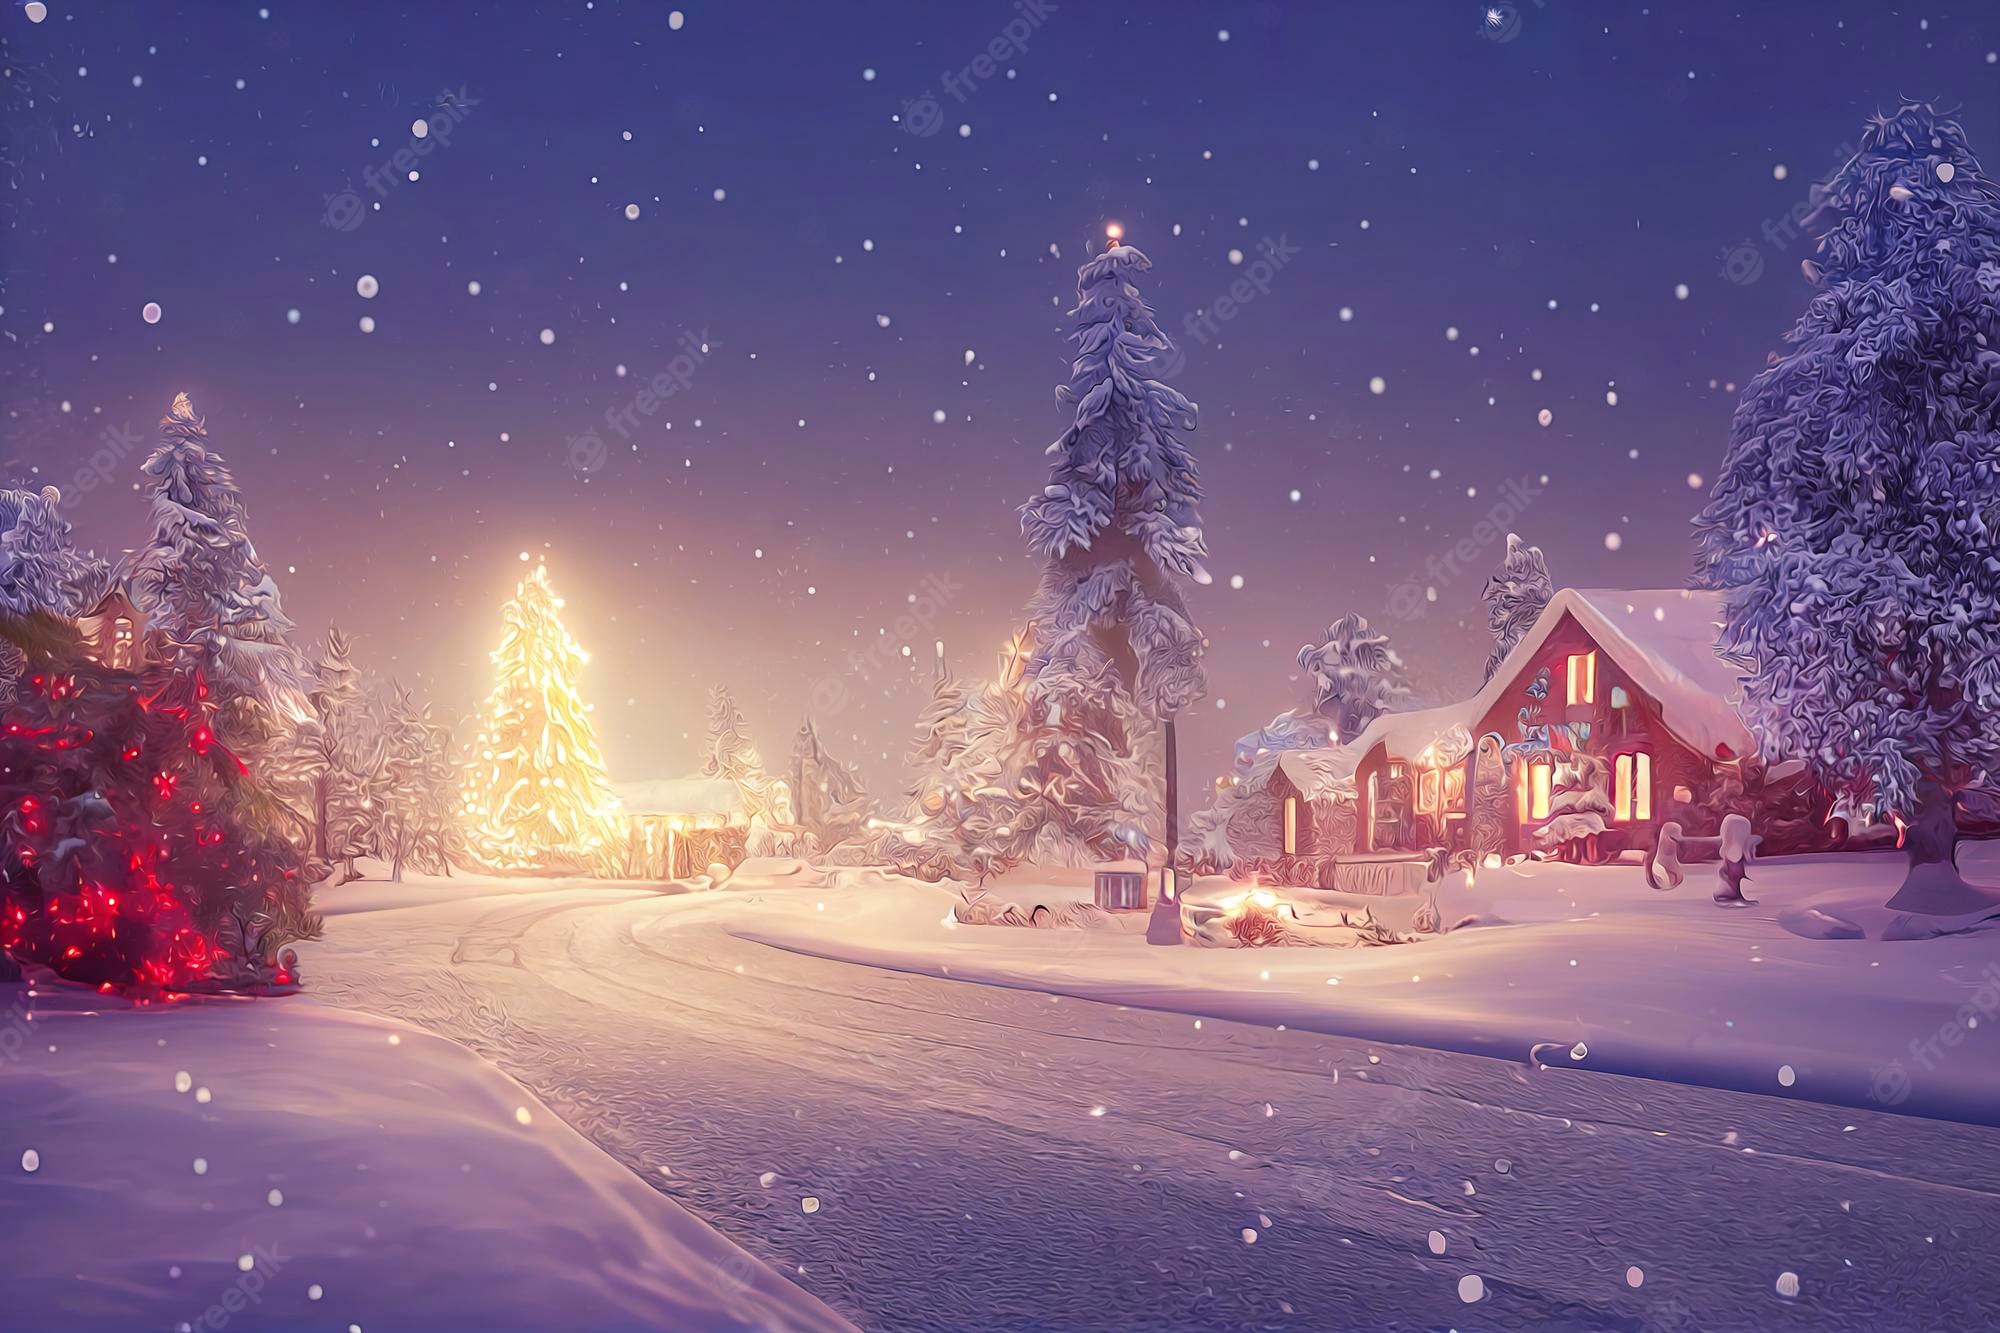 Christmas night village Image. Free Vectors, & PSD